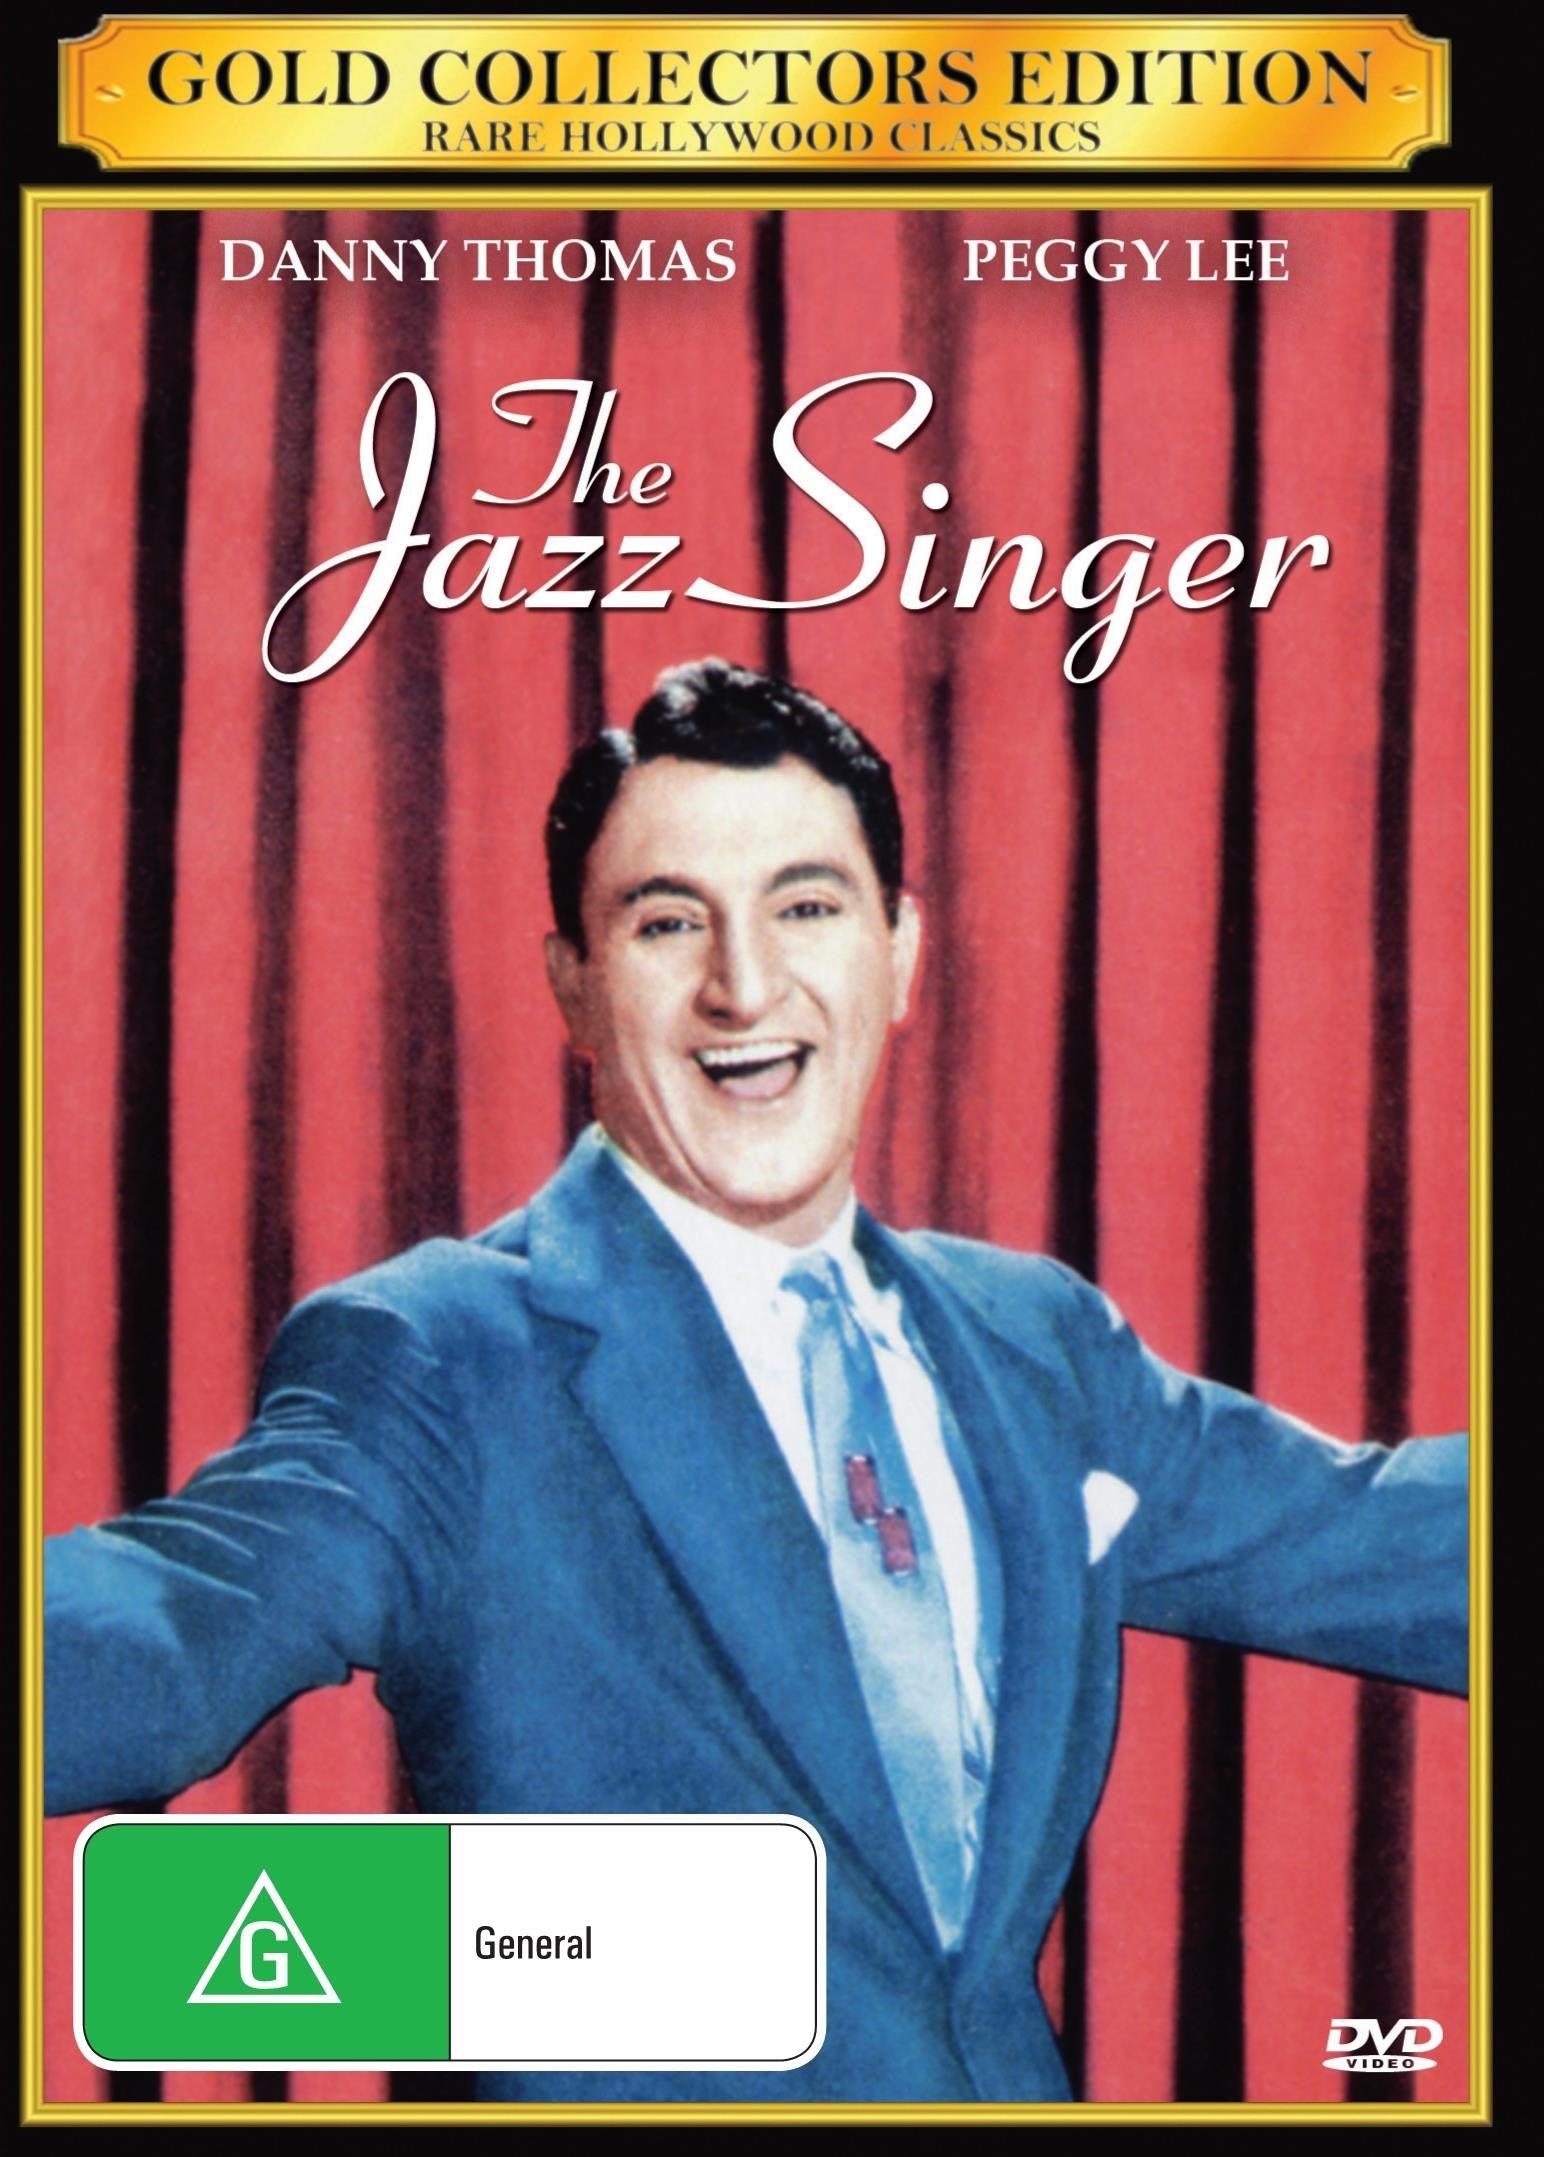 The Jazz Singer rareandcollectibledvds